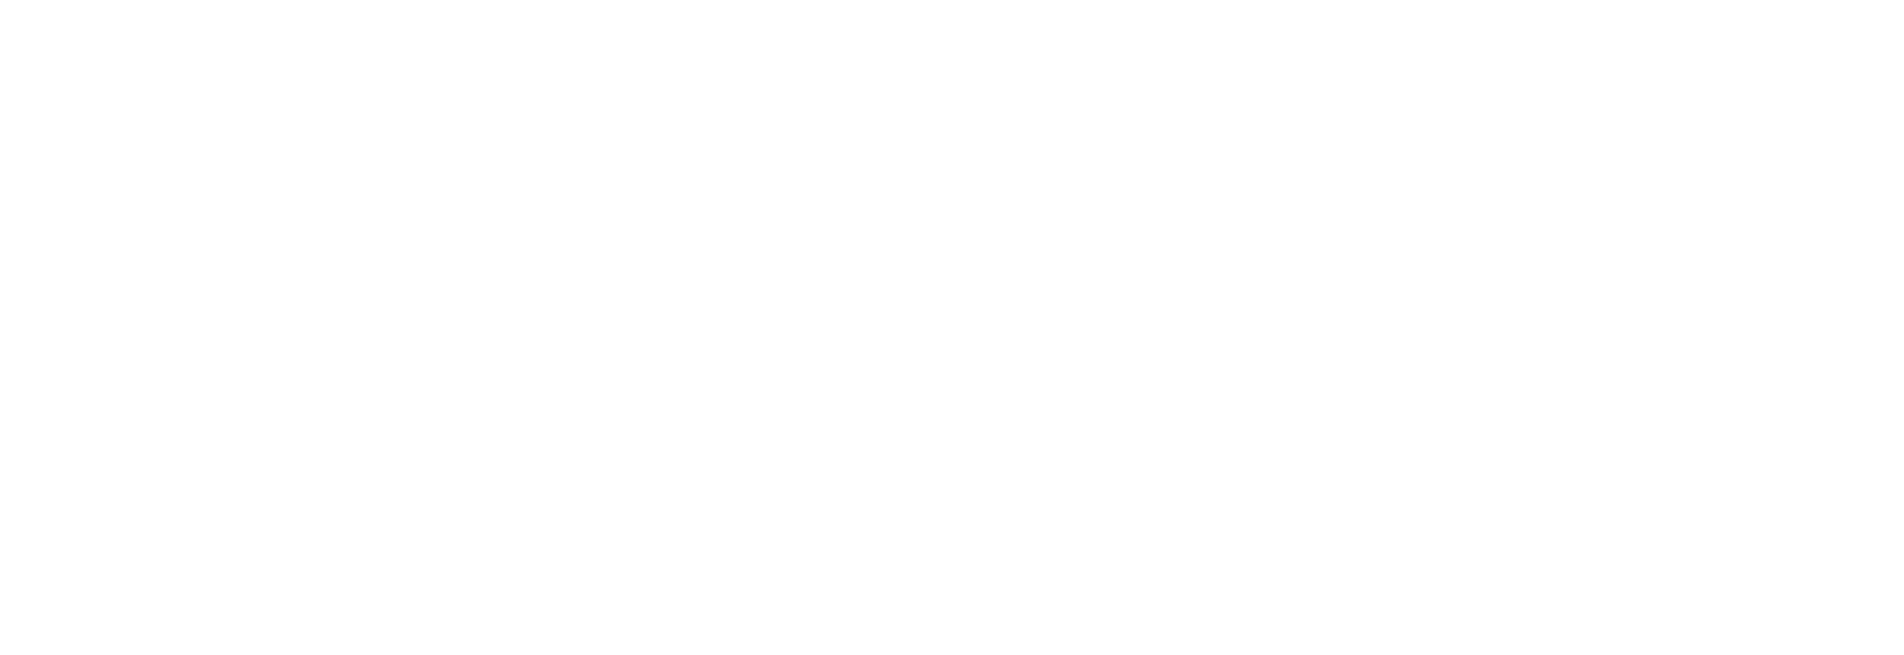 University of Waikato Logo